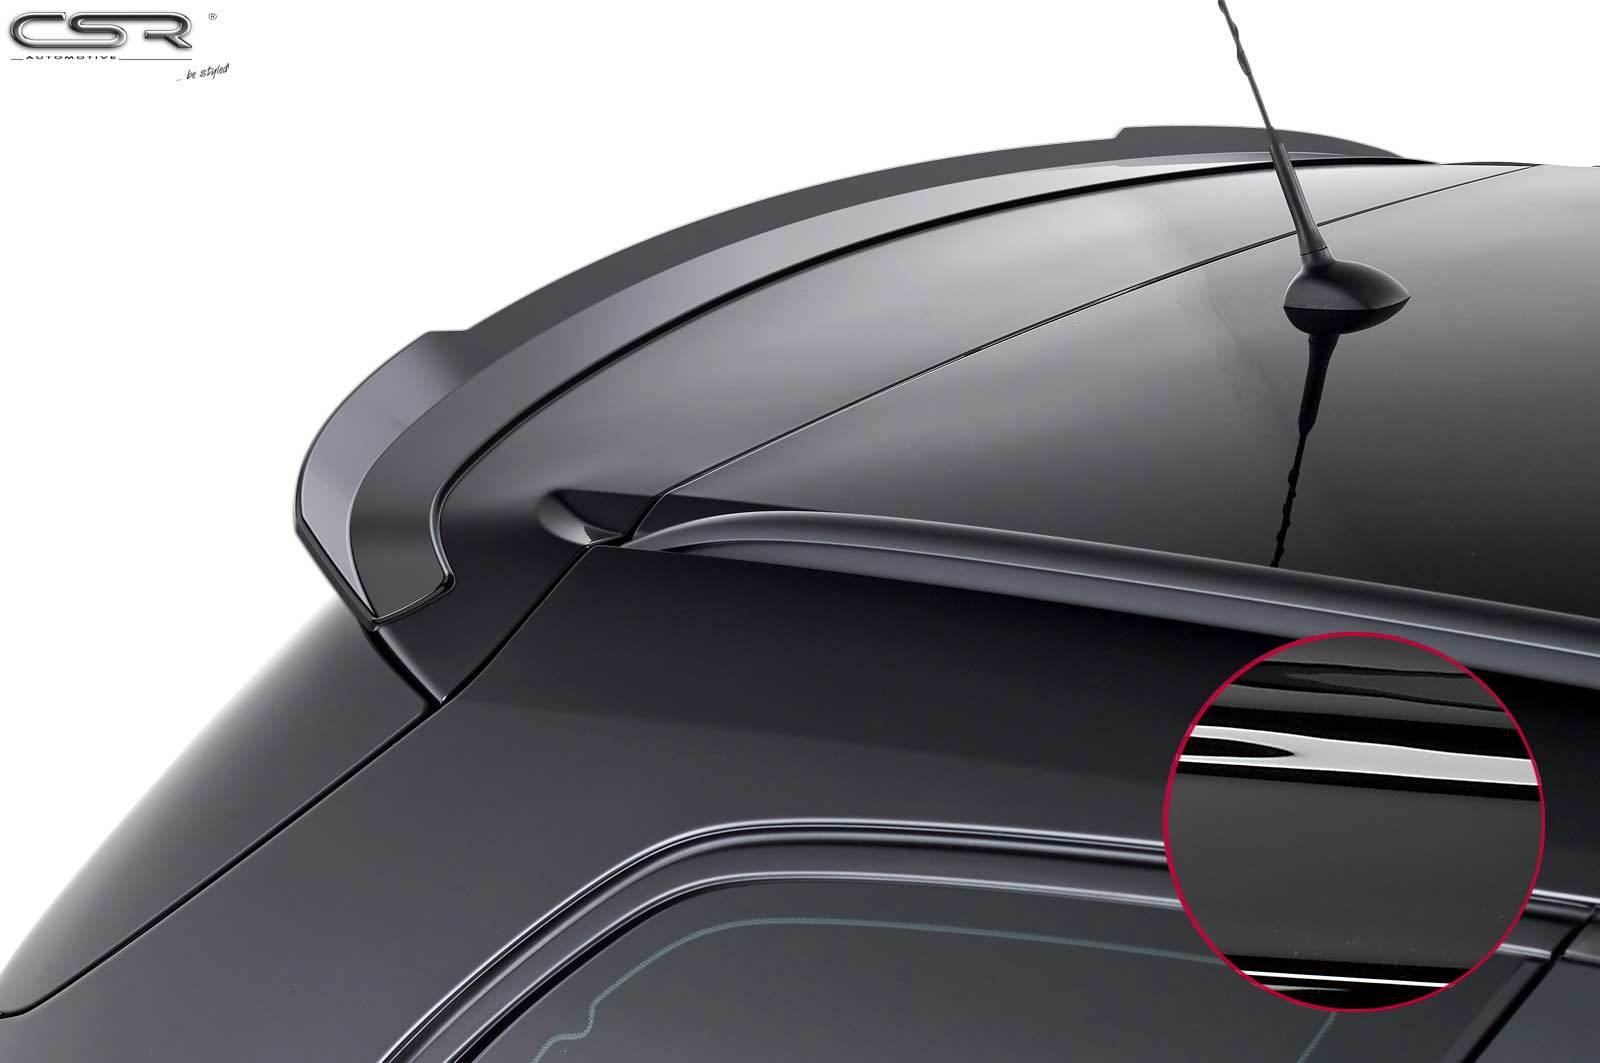 Dachspoiler schwarz Ansatz Heckspoiler für Opel Astra J GTC Spoiler Dach Kanten